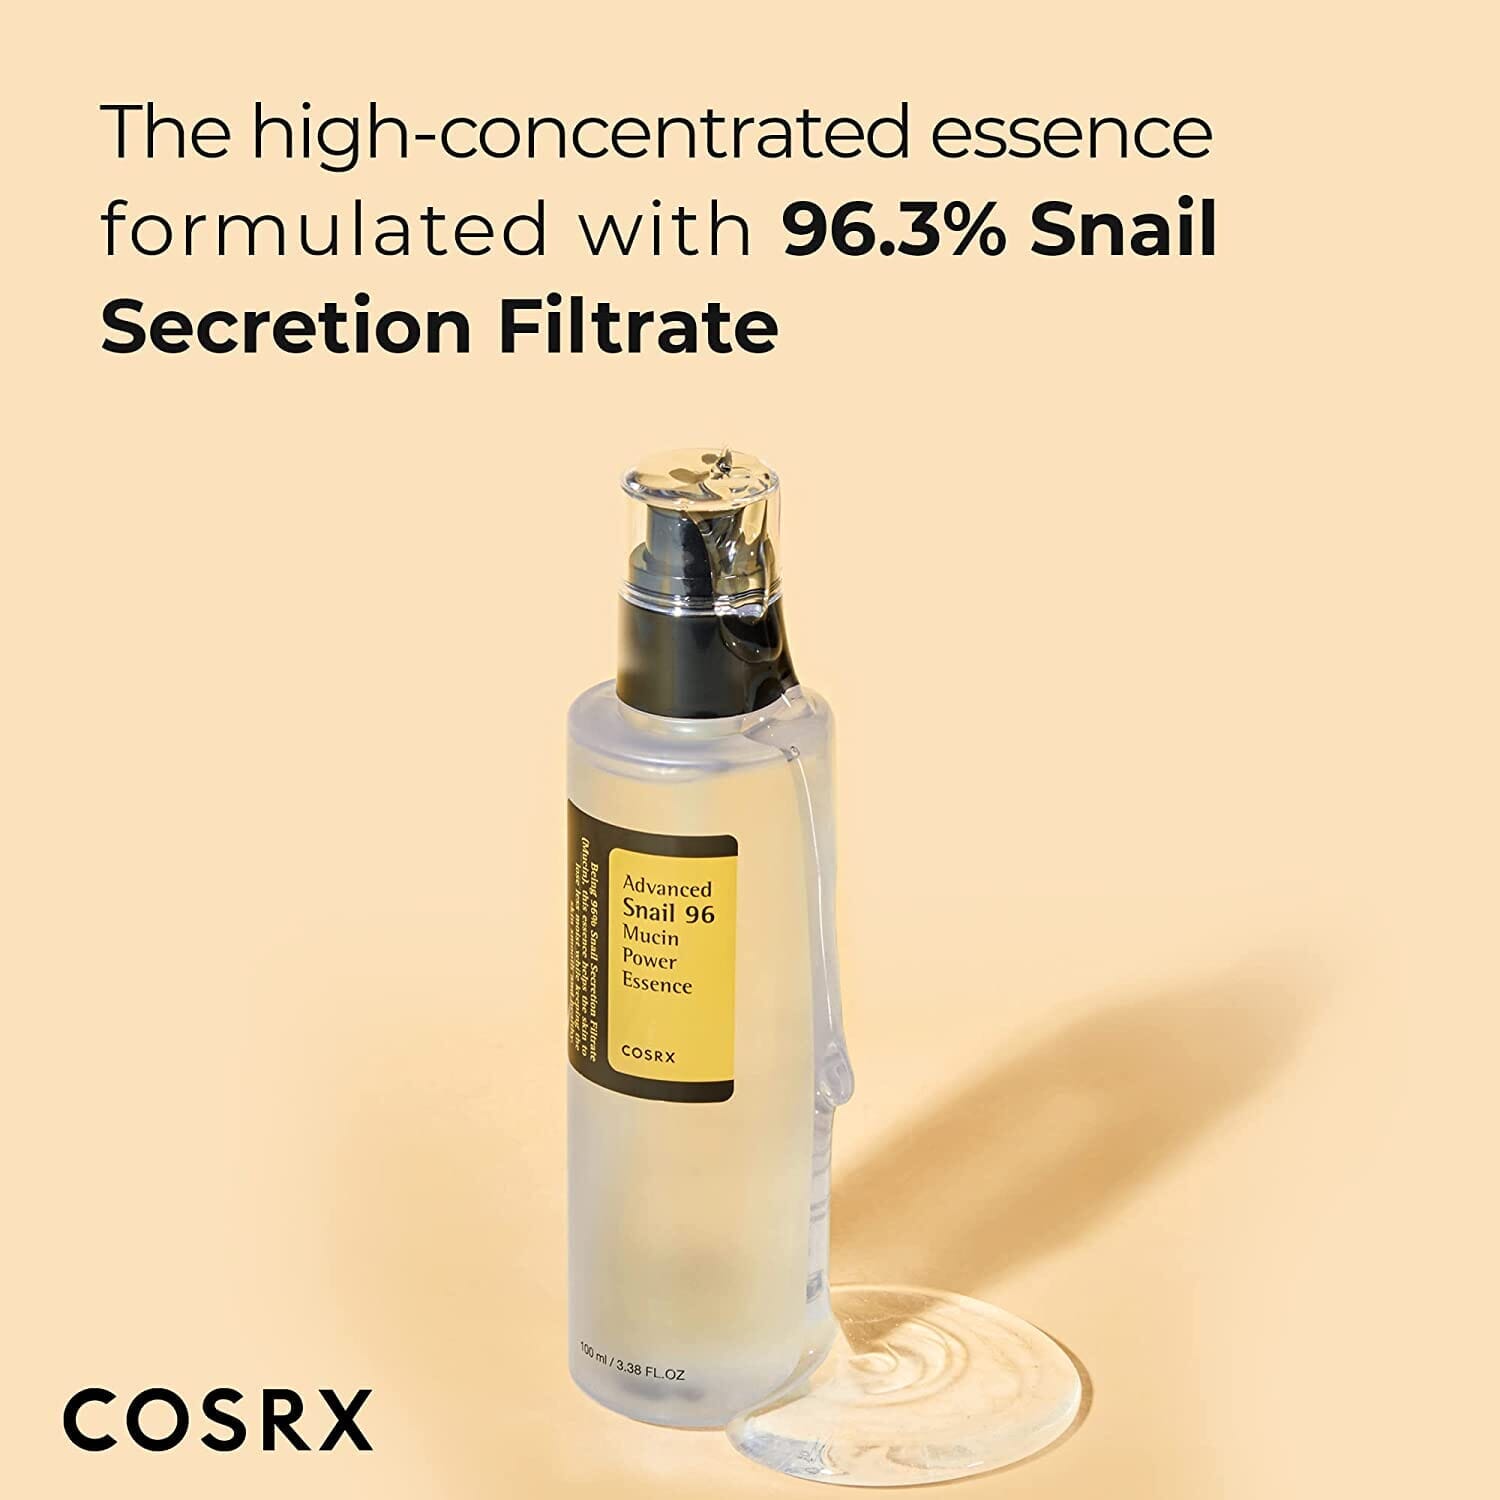 [Bank Transfer Offer]💲 COSRX Advanced Snail 96 Mucin Power Essence 100ml Skin Care COSRX ORION XO Sri Lanka